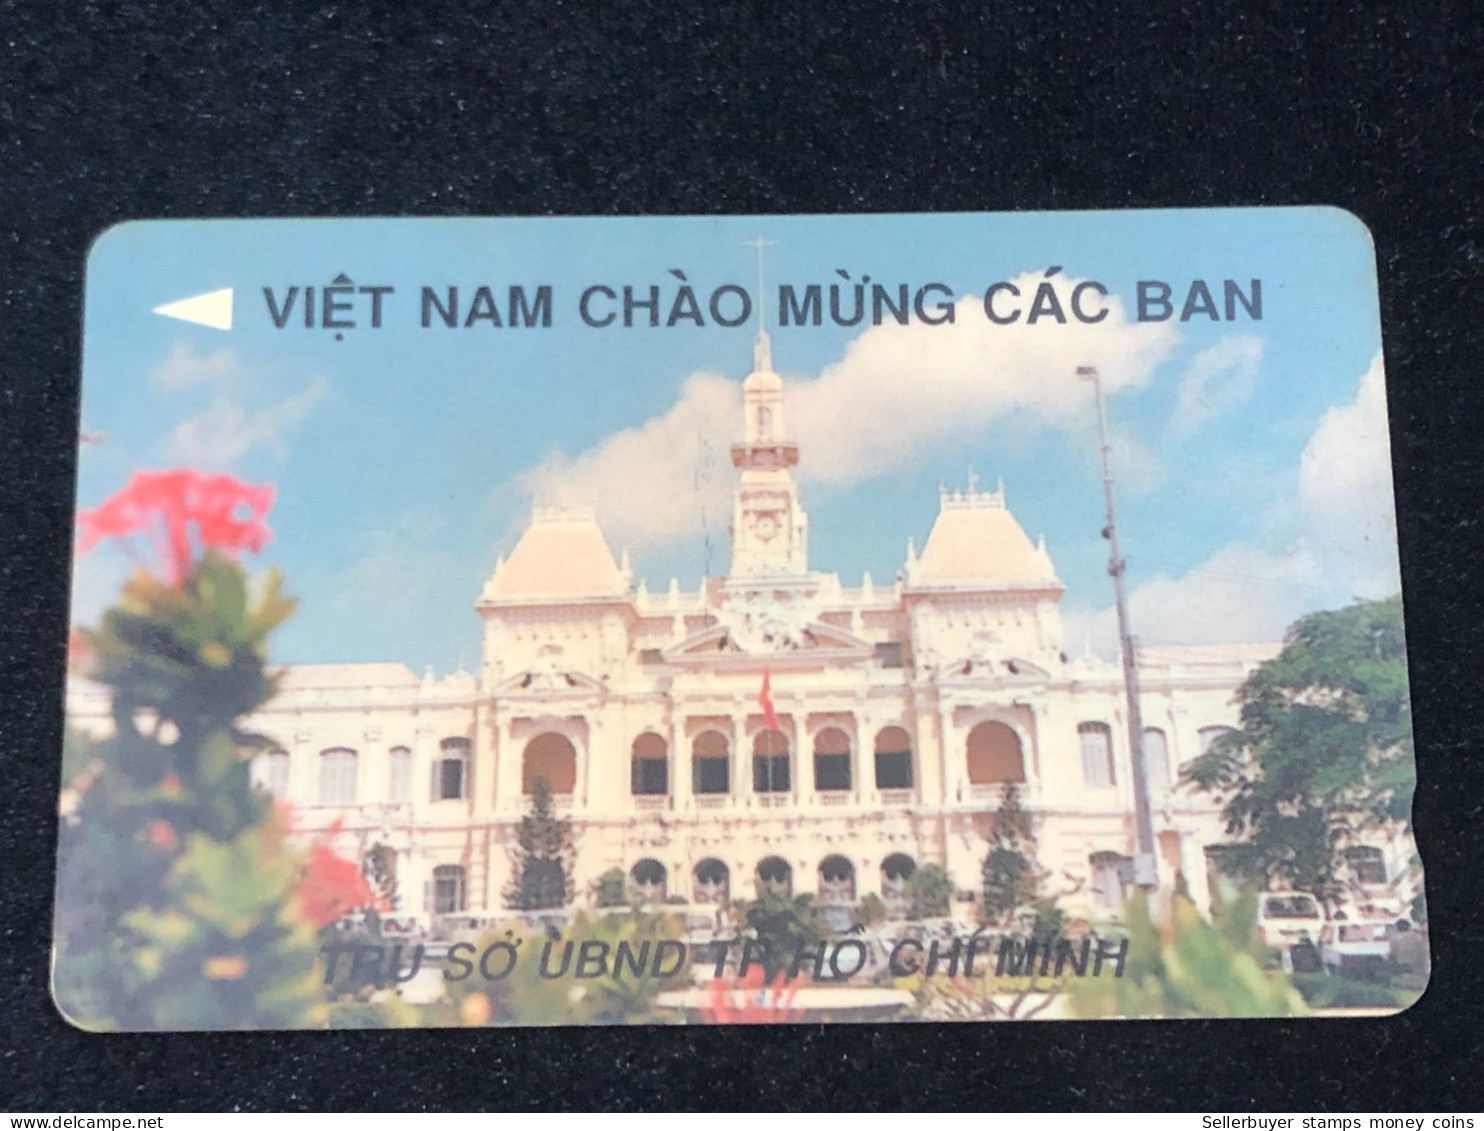 Card Phonekad Vietnam(HCM BUILDING 150 000dong-1994)-1pcs - Vietnam